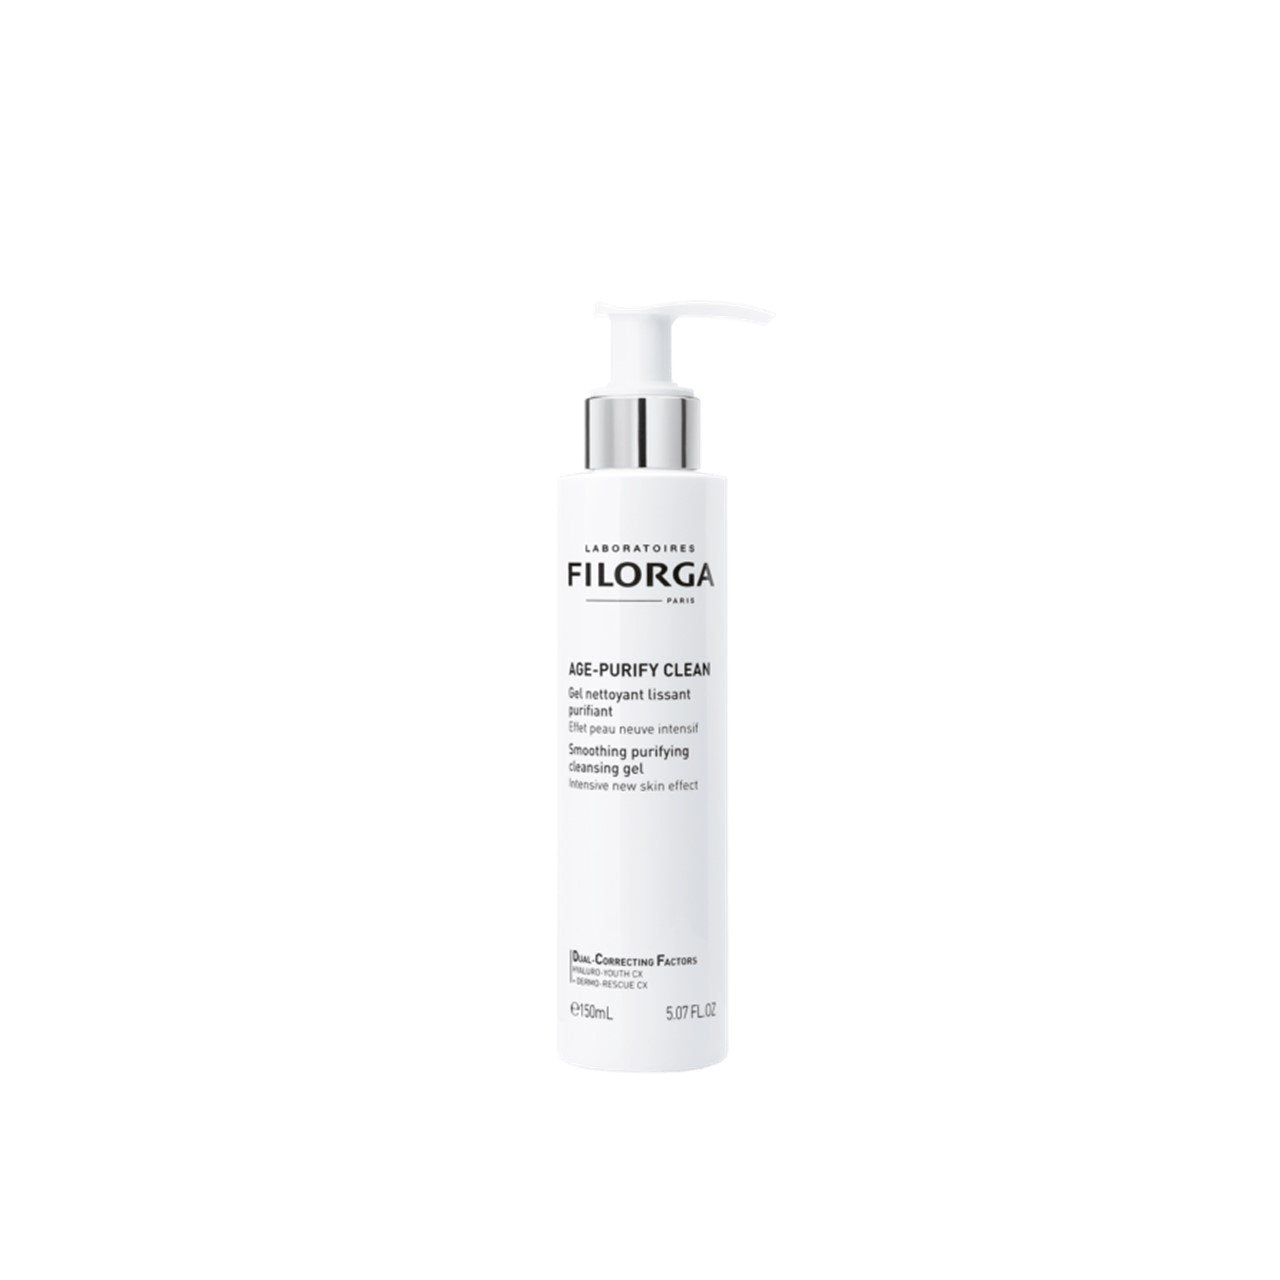 Filorga Age-Purify Clean Gel de Limpeza Purificante 150ml